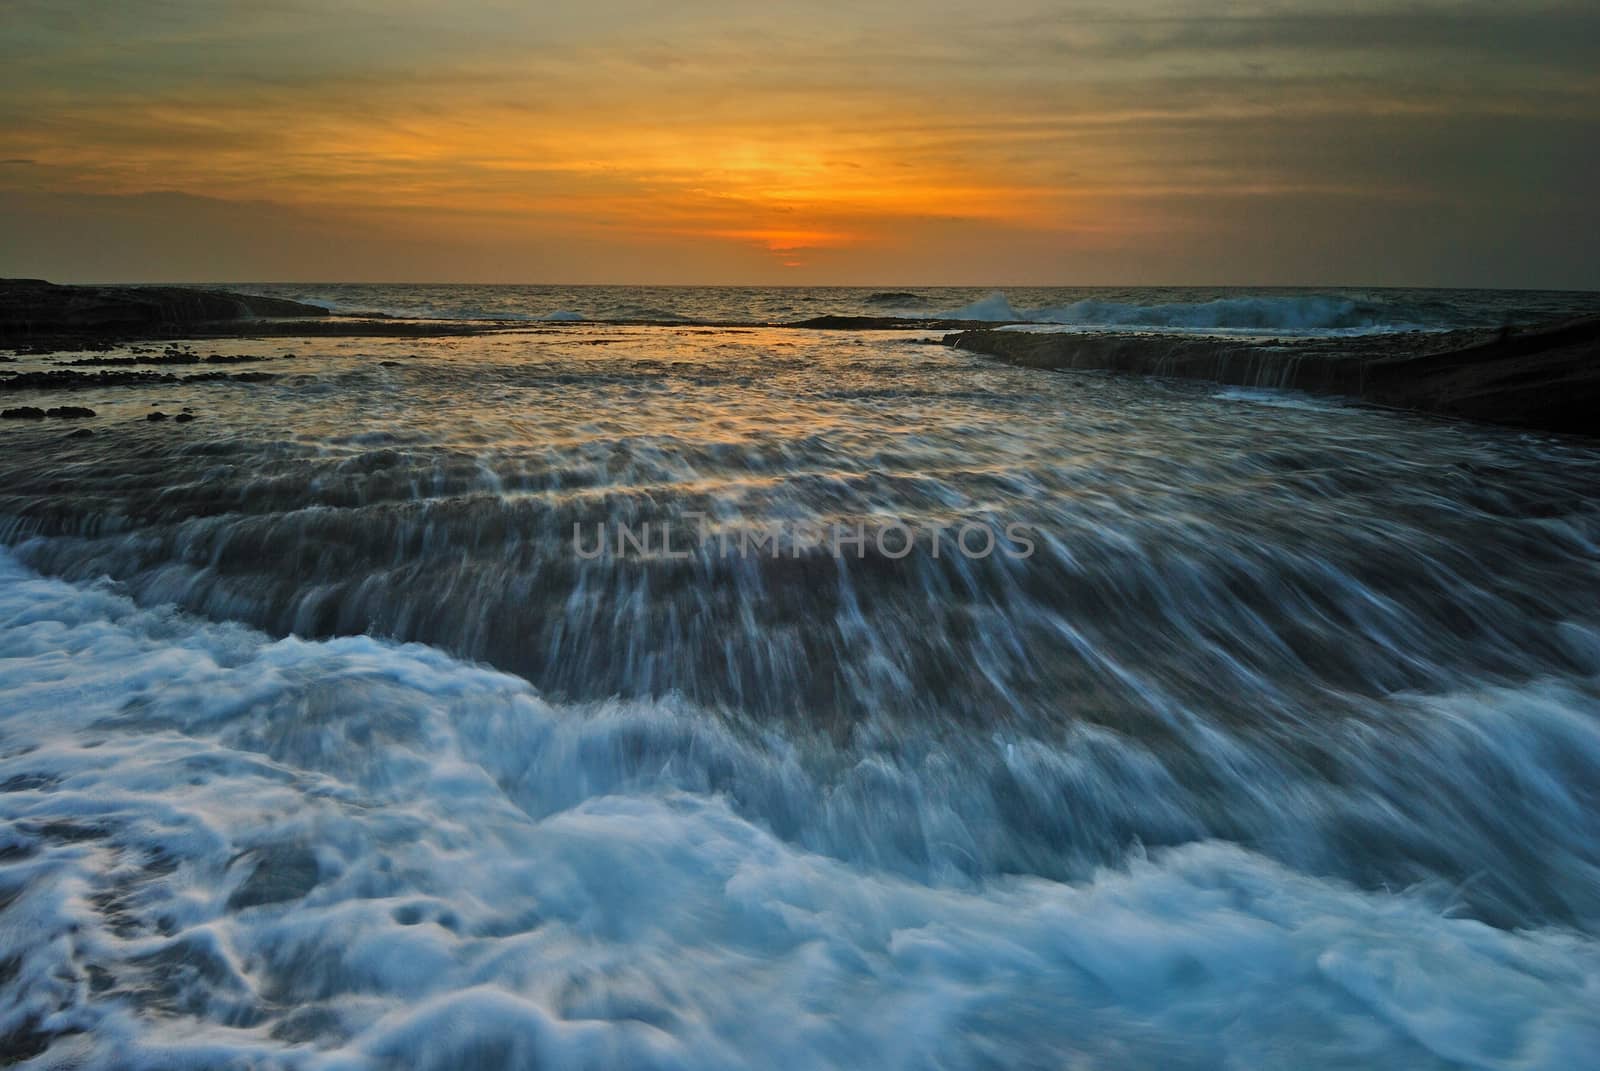 Sunrise seascape with rushing waves